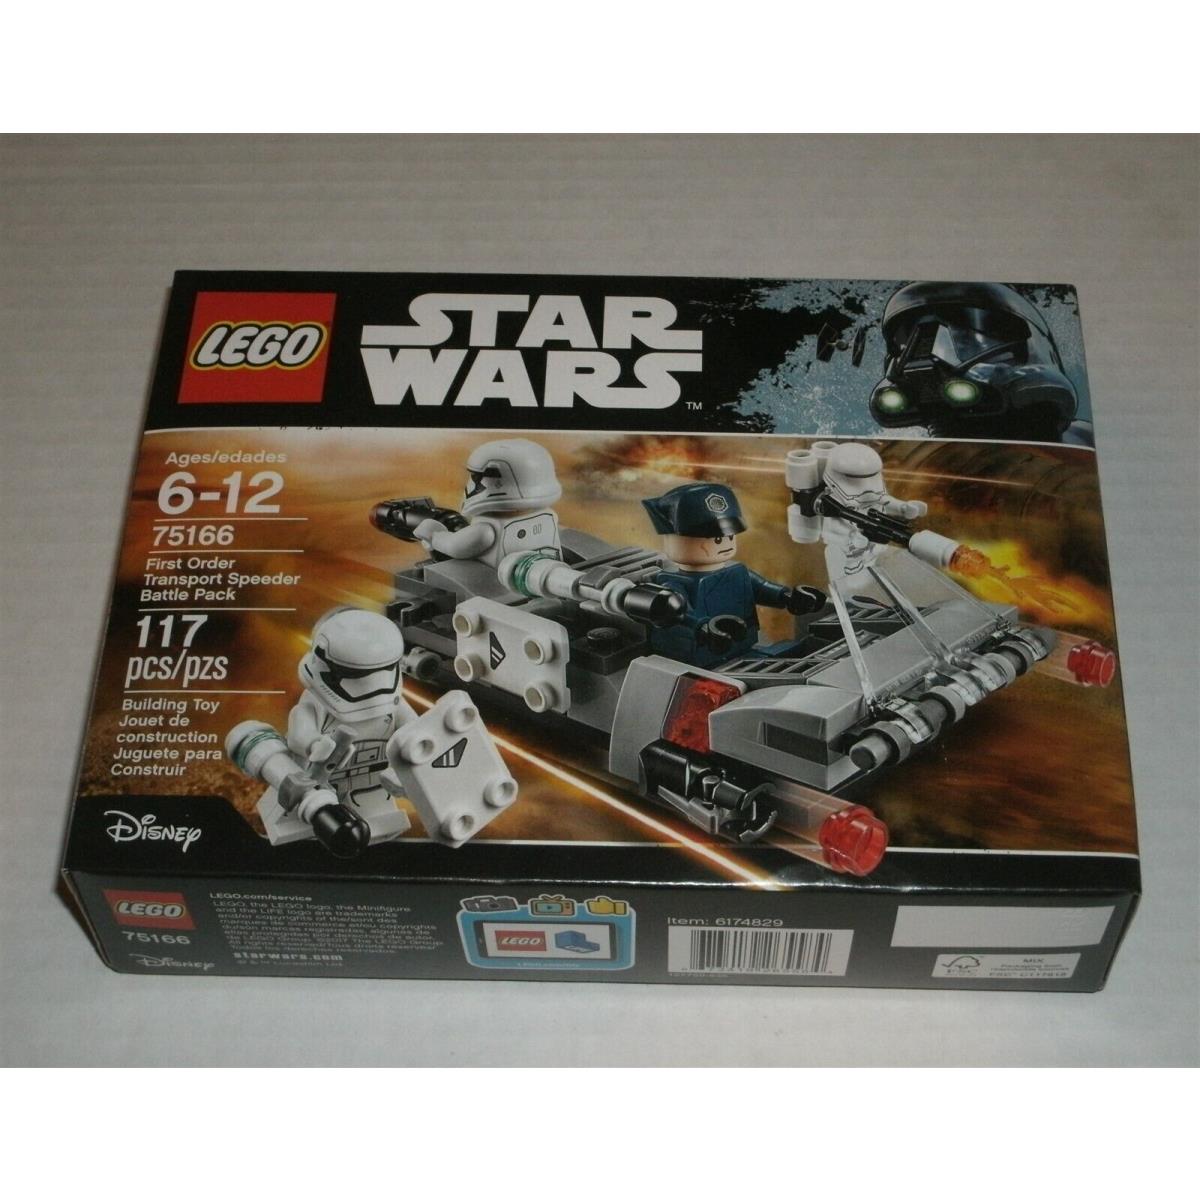 Lego Star Wars First Order Transport Speeder Battle Pack 75166 Set